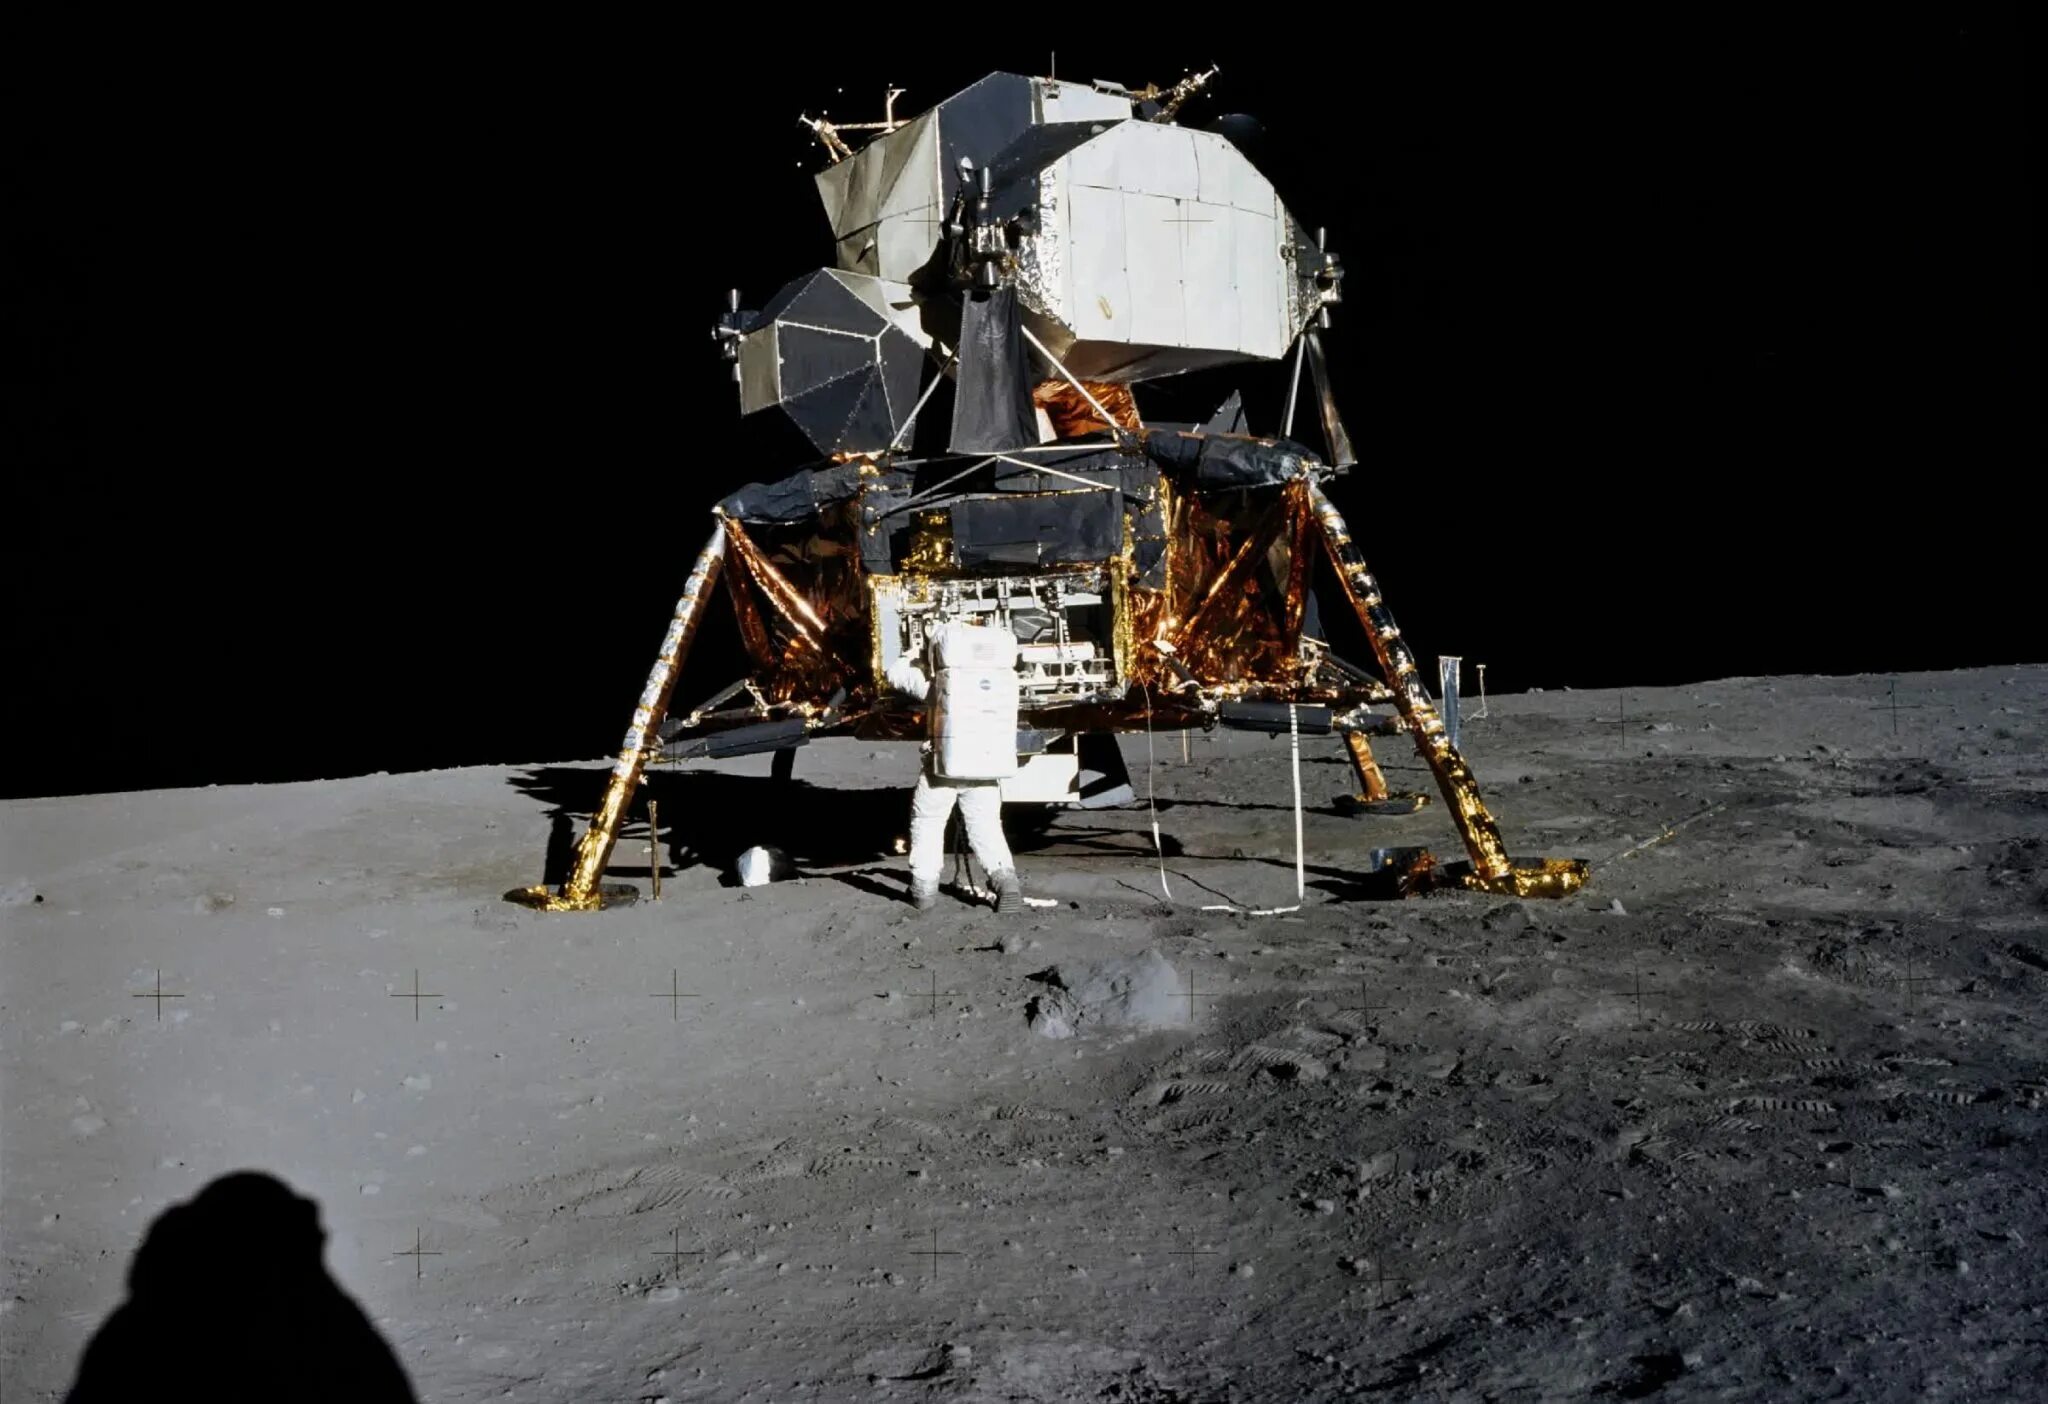 Пилотируемый полет на луну. Аполлон 11. Старт Аполлона 11. Apollo 11 Lunar Module. Лунный модуль корабля Аполлон 11 НАСА.